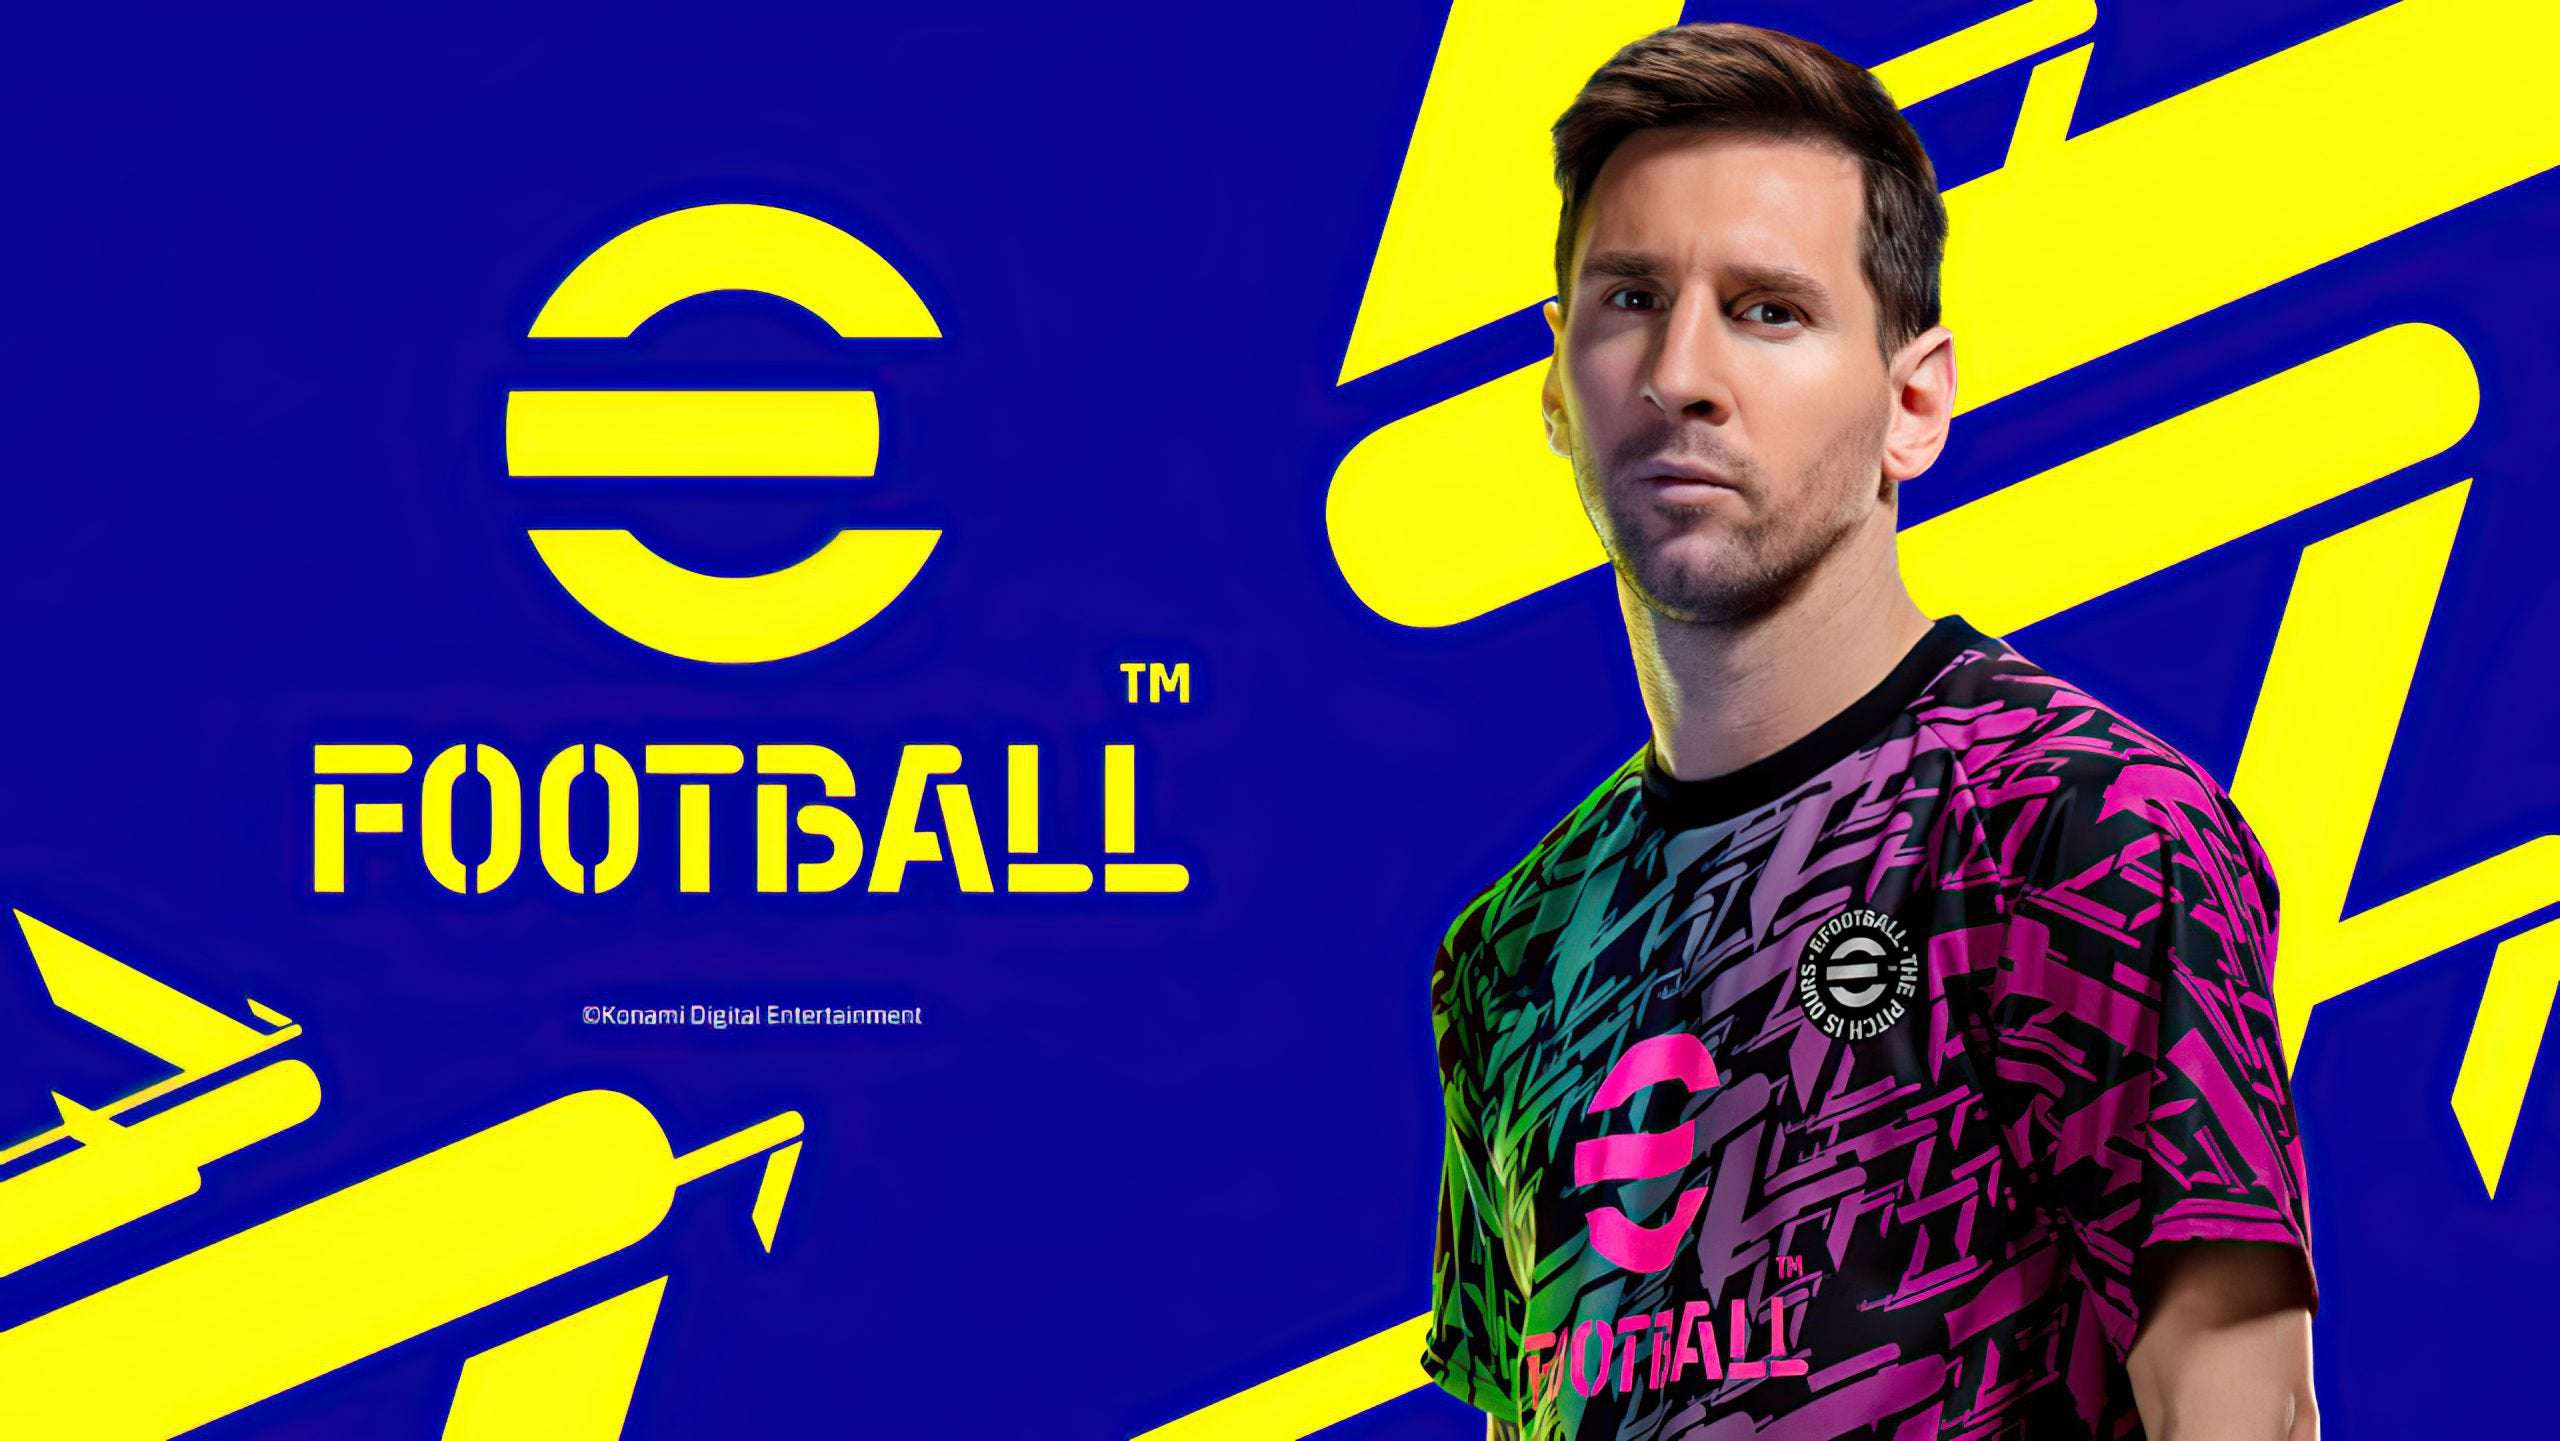 image for eFootball Announced as KONAMI’s Free-to-Play, Cross-Platform Football Game